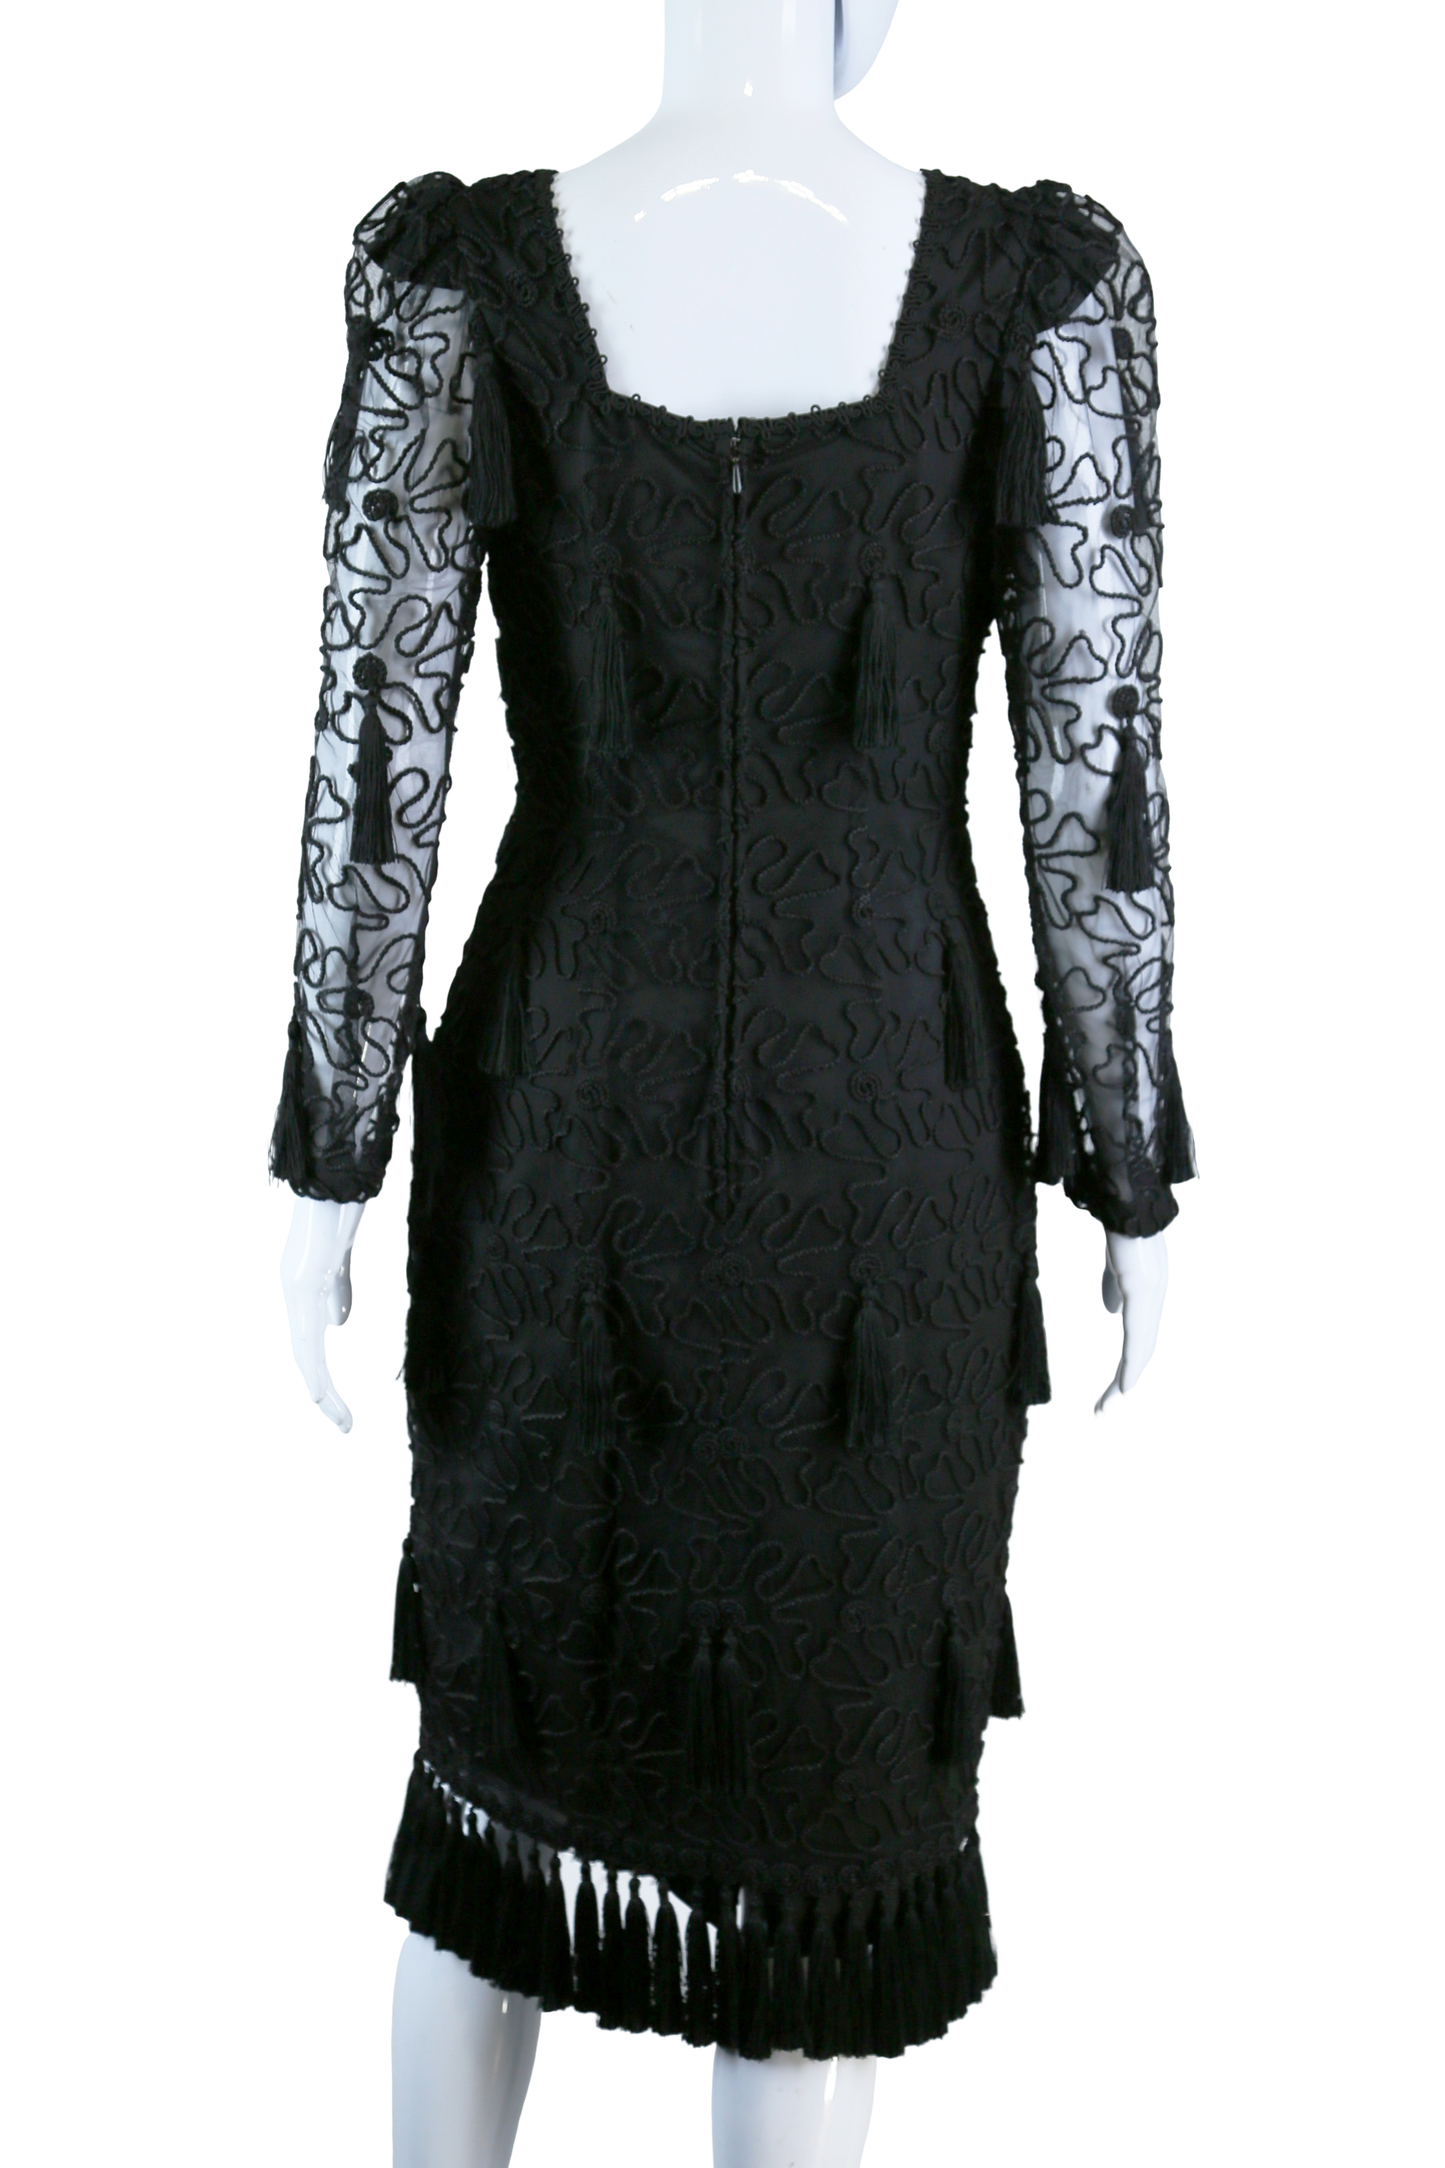 Louis Feraud Soutache Tassel Dress - Embers / Cinders Vintage